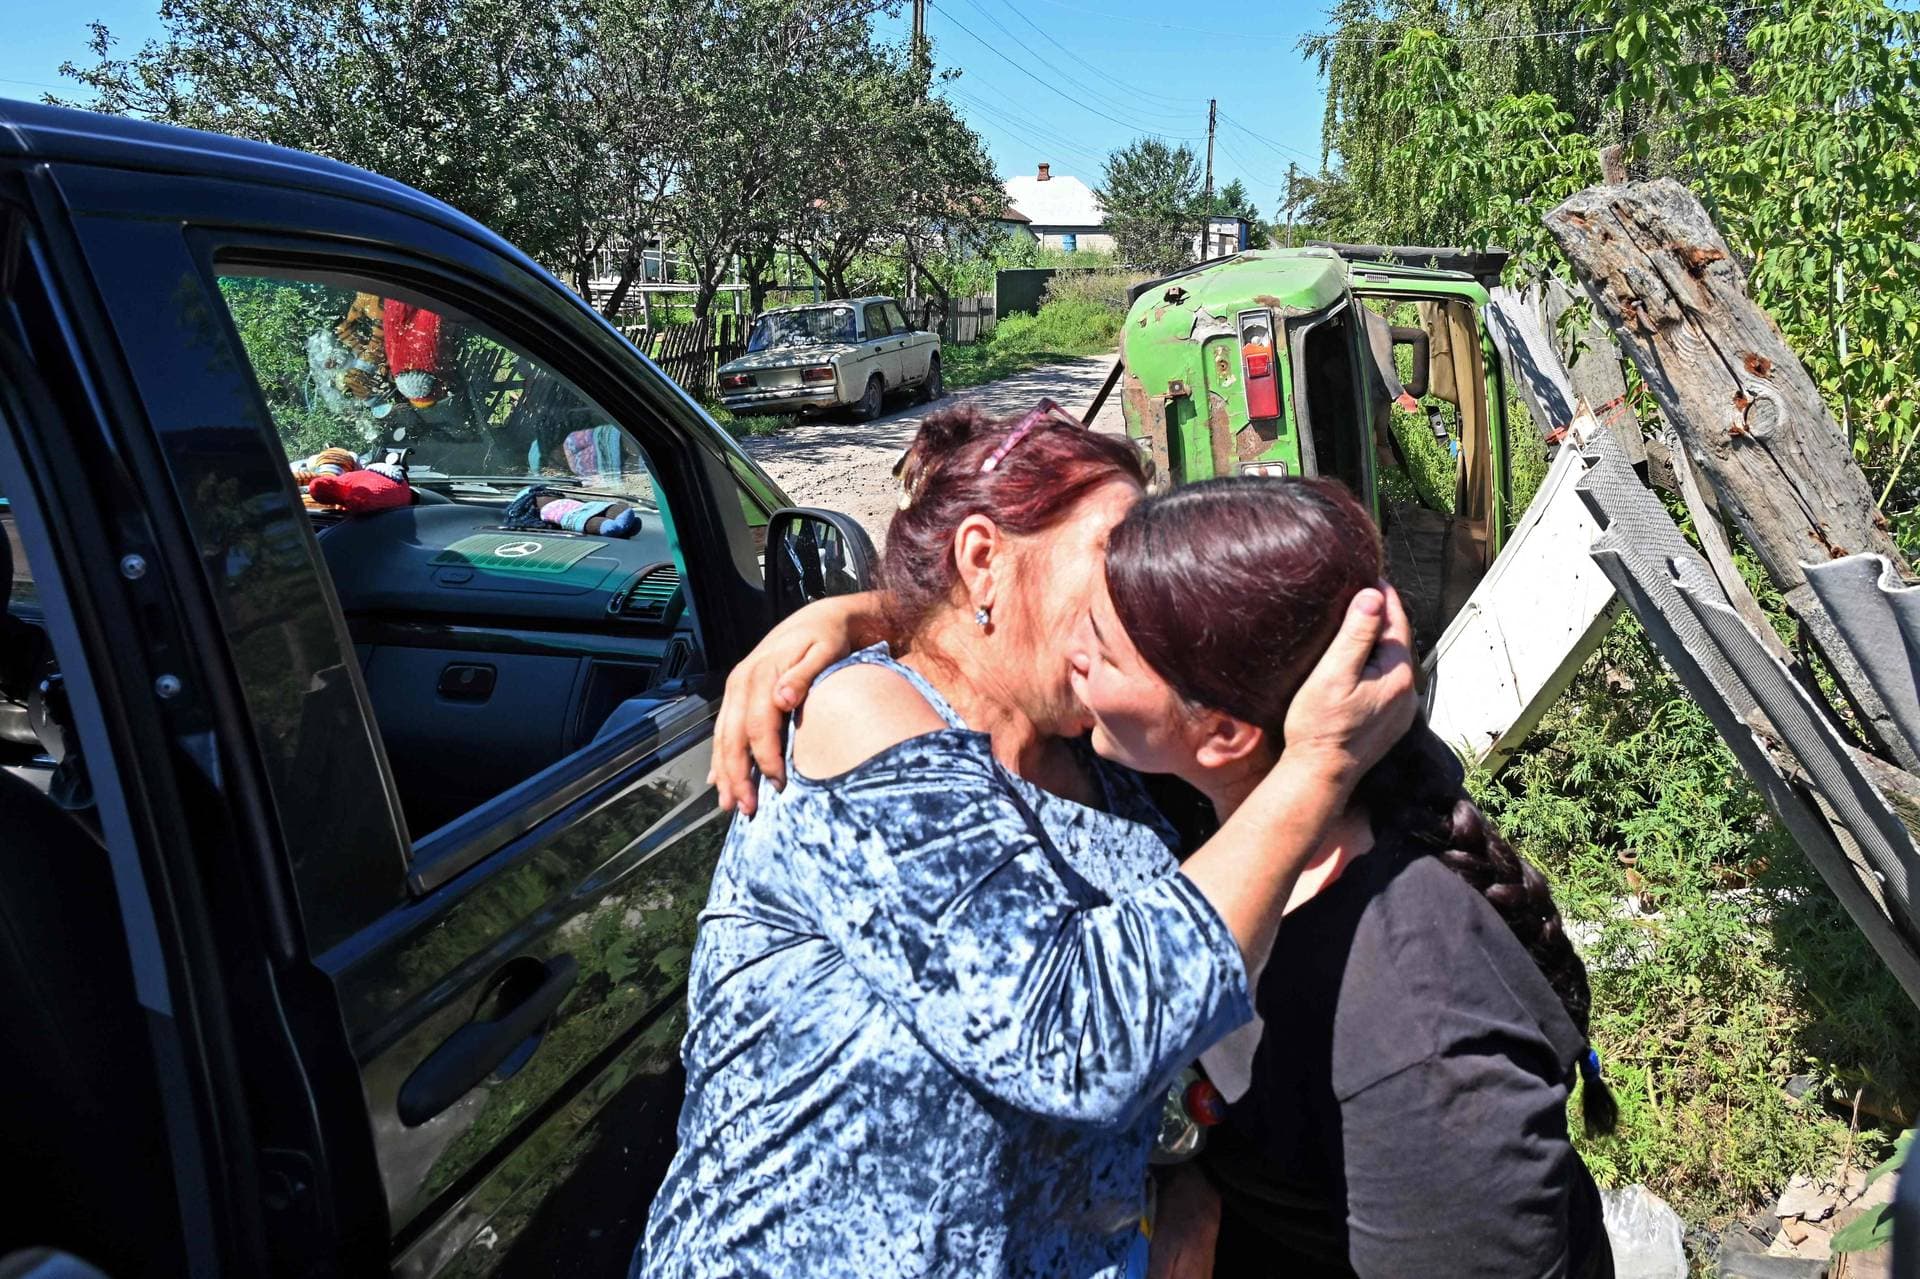 Lilia Bunescu says goodbye to her mother who evacuates from Kruglyakivka village